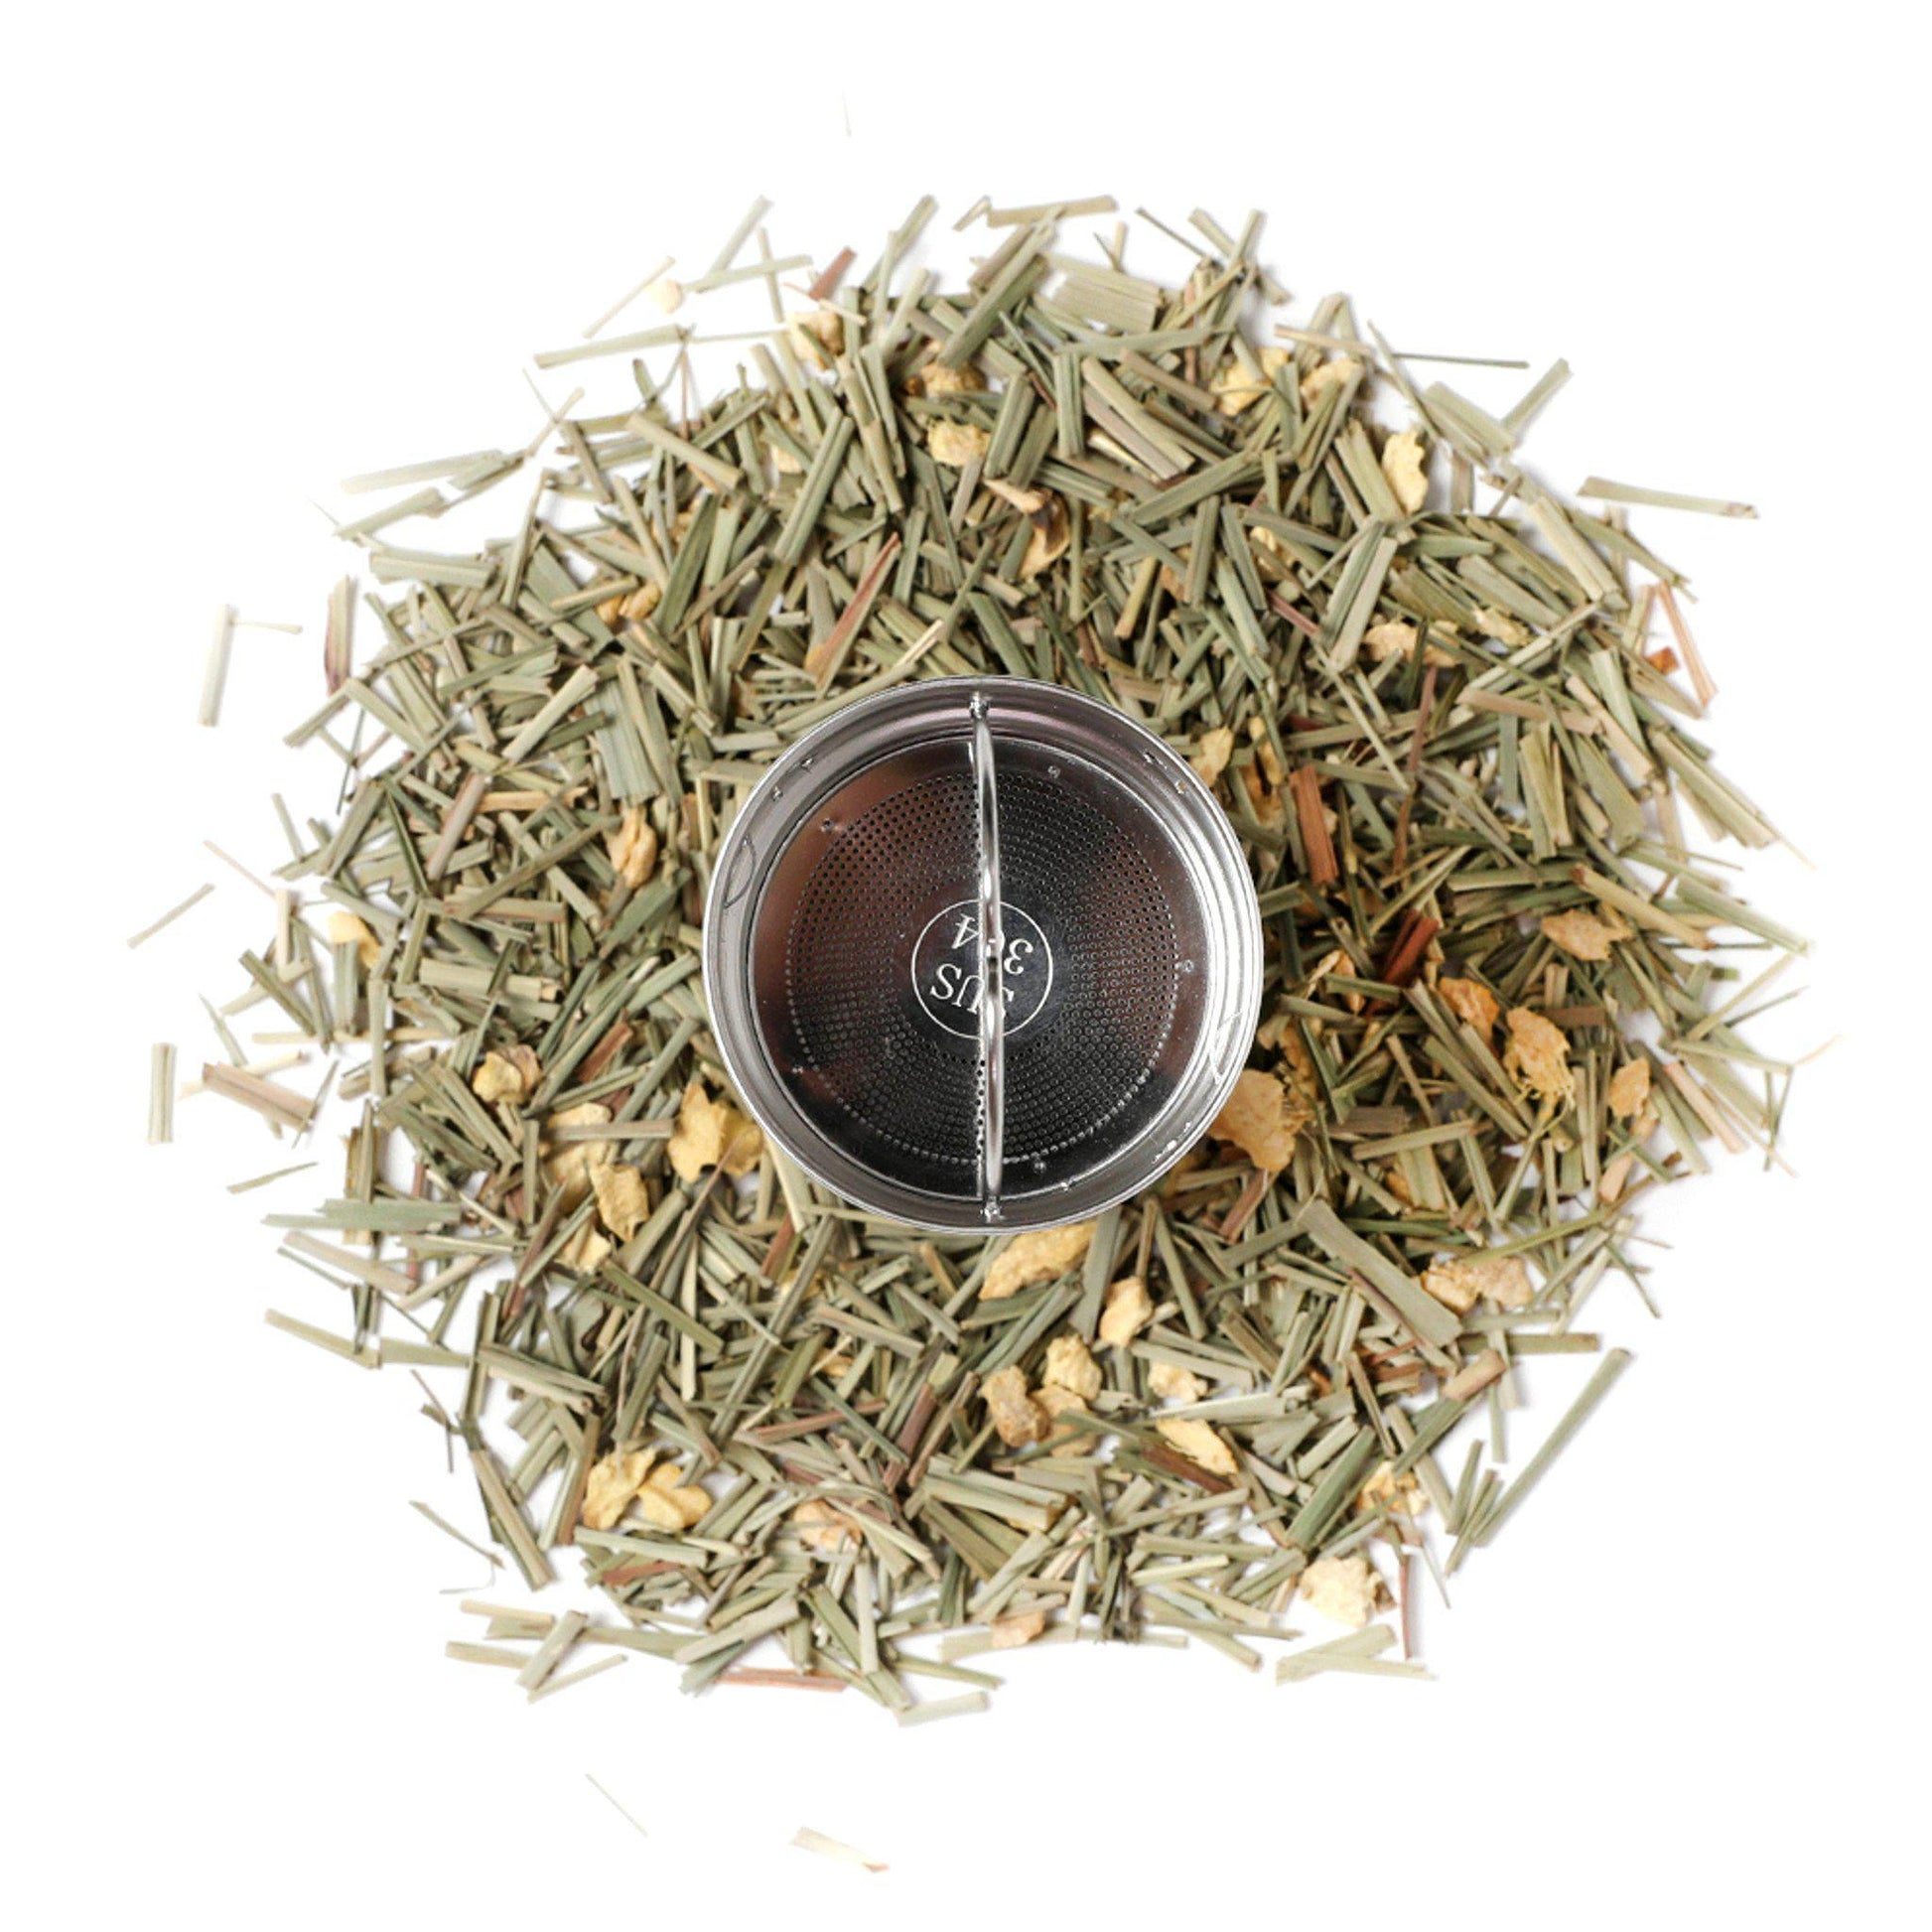 Herbal Lemongrass & Ginger Tea - Loose Leaf Tea Gift Set - mykodu